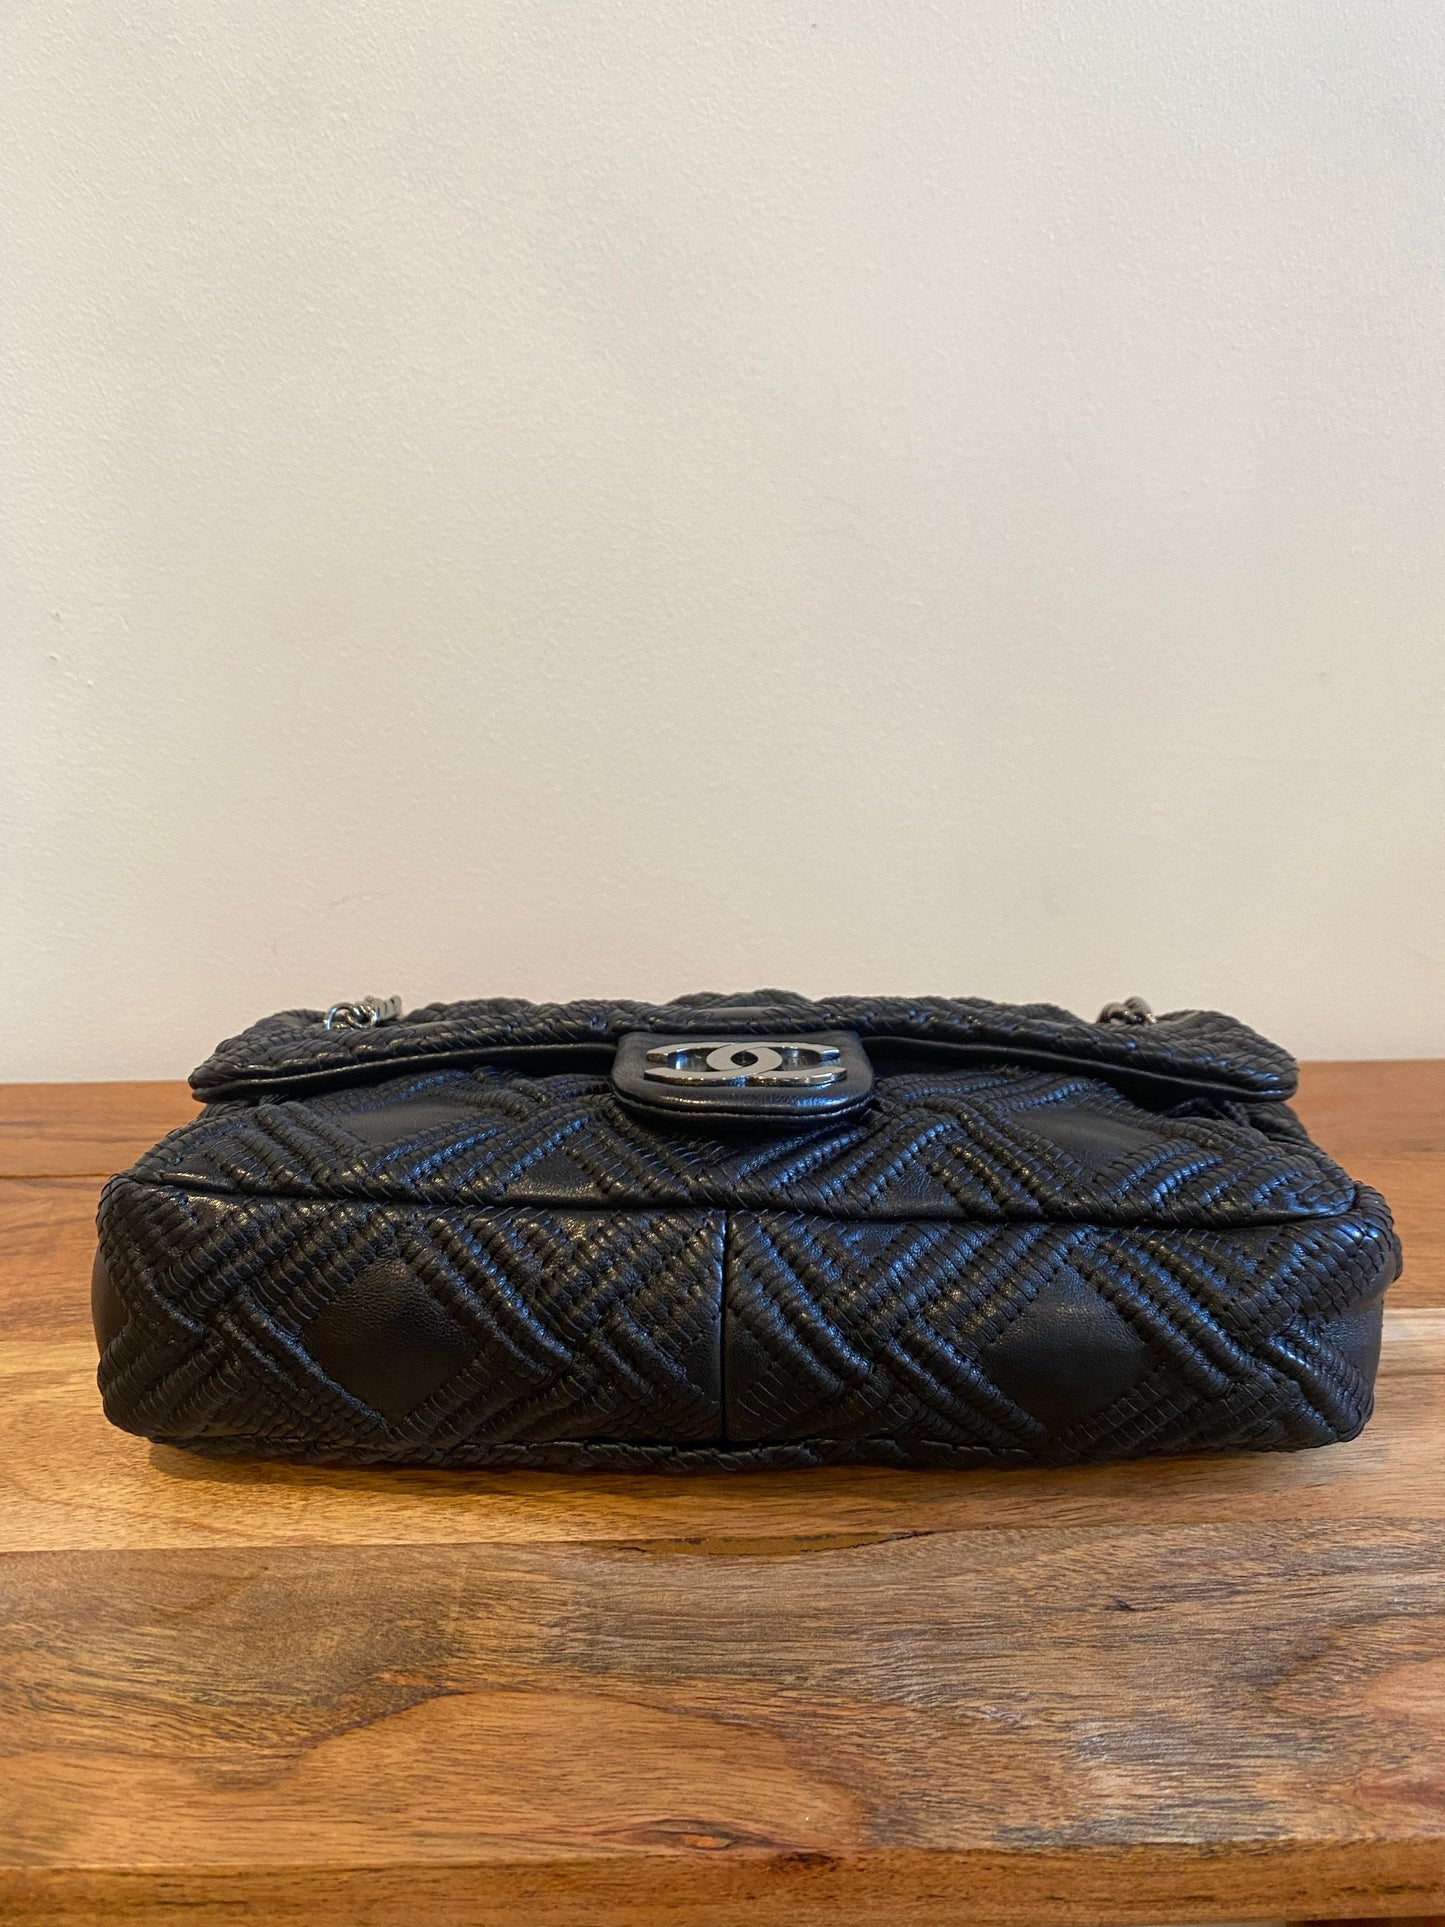 Chanel Black Woven Grid Leather Single Flap Bag